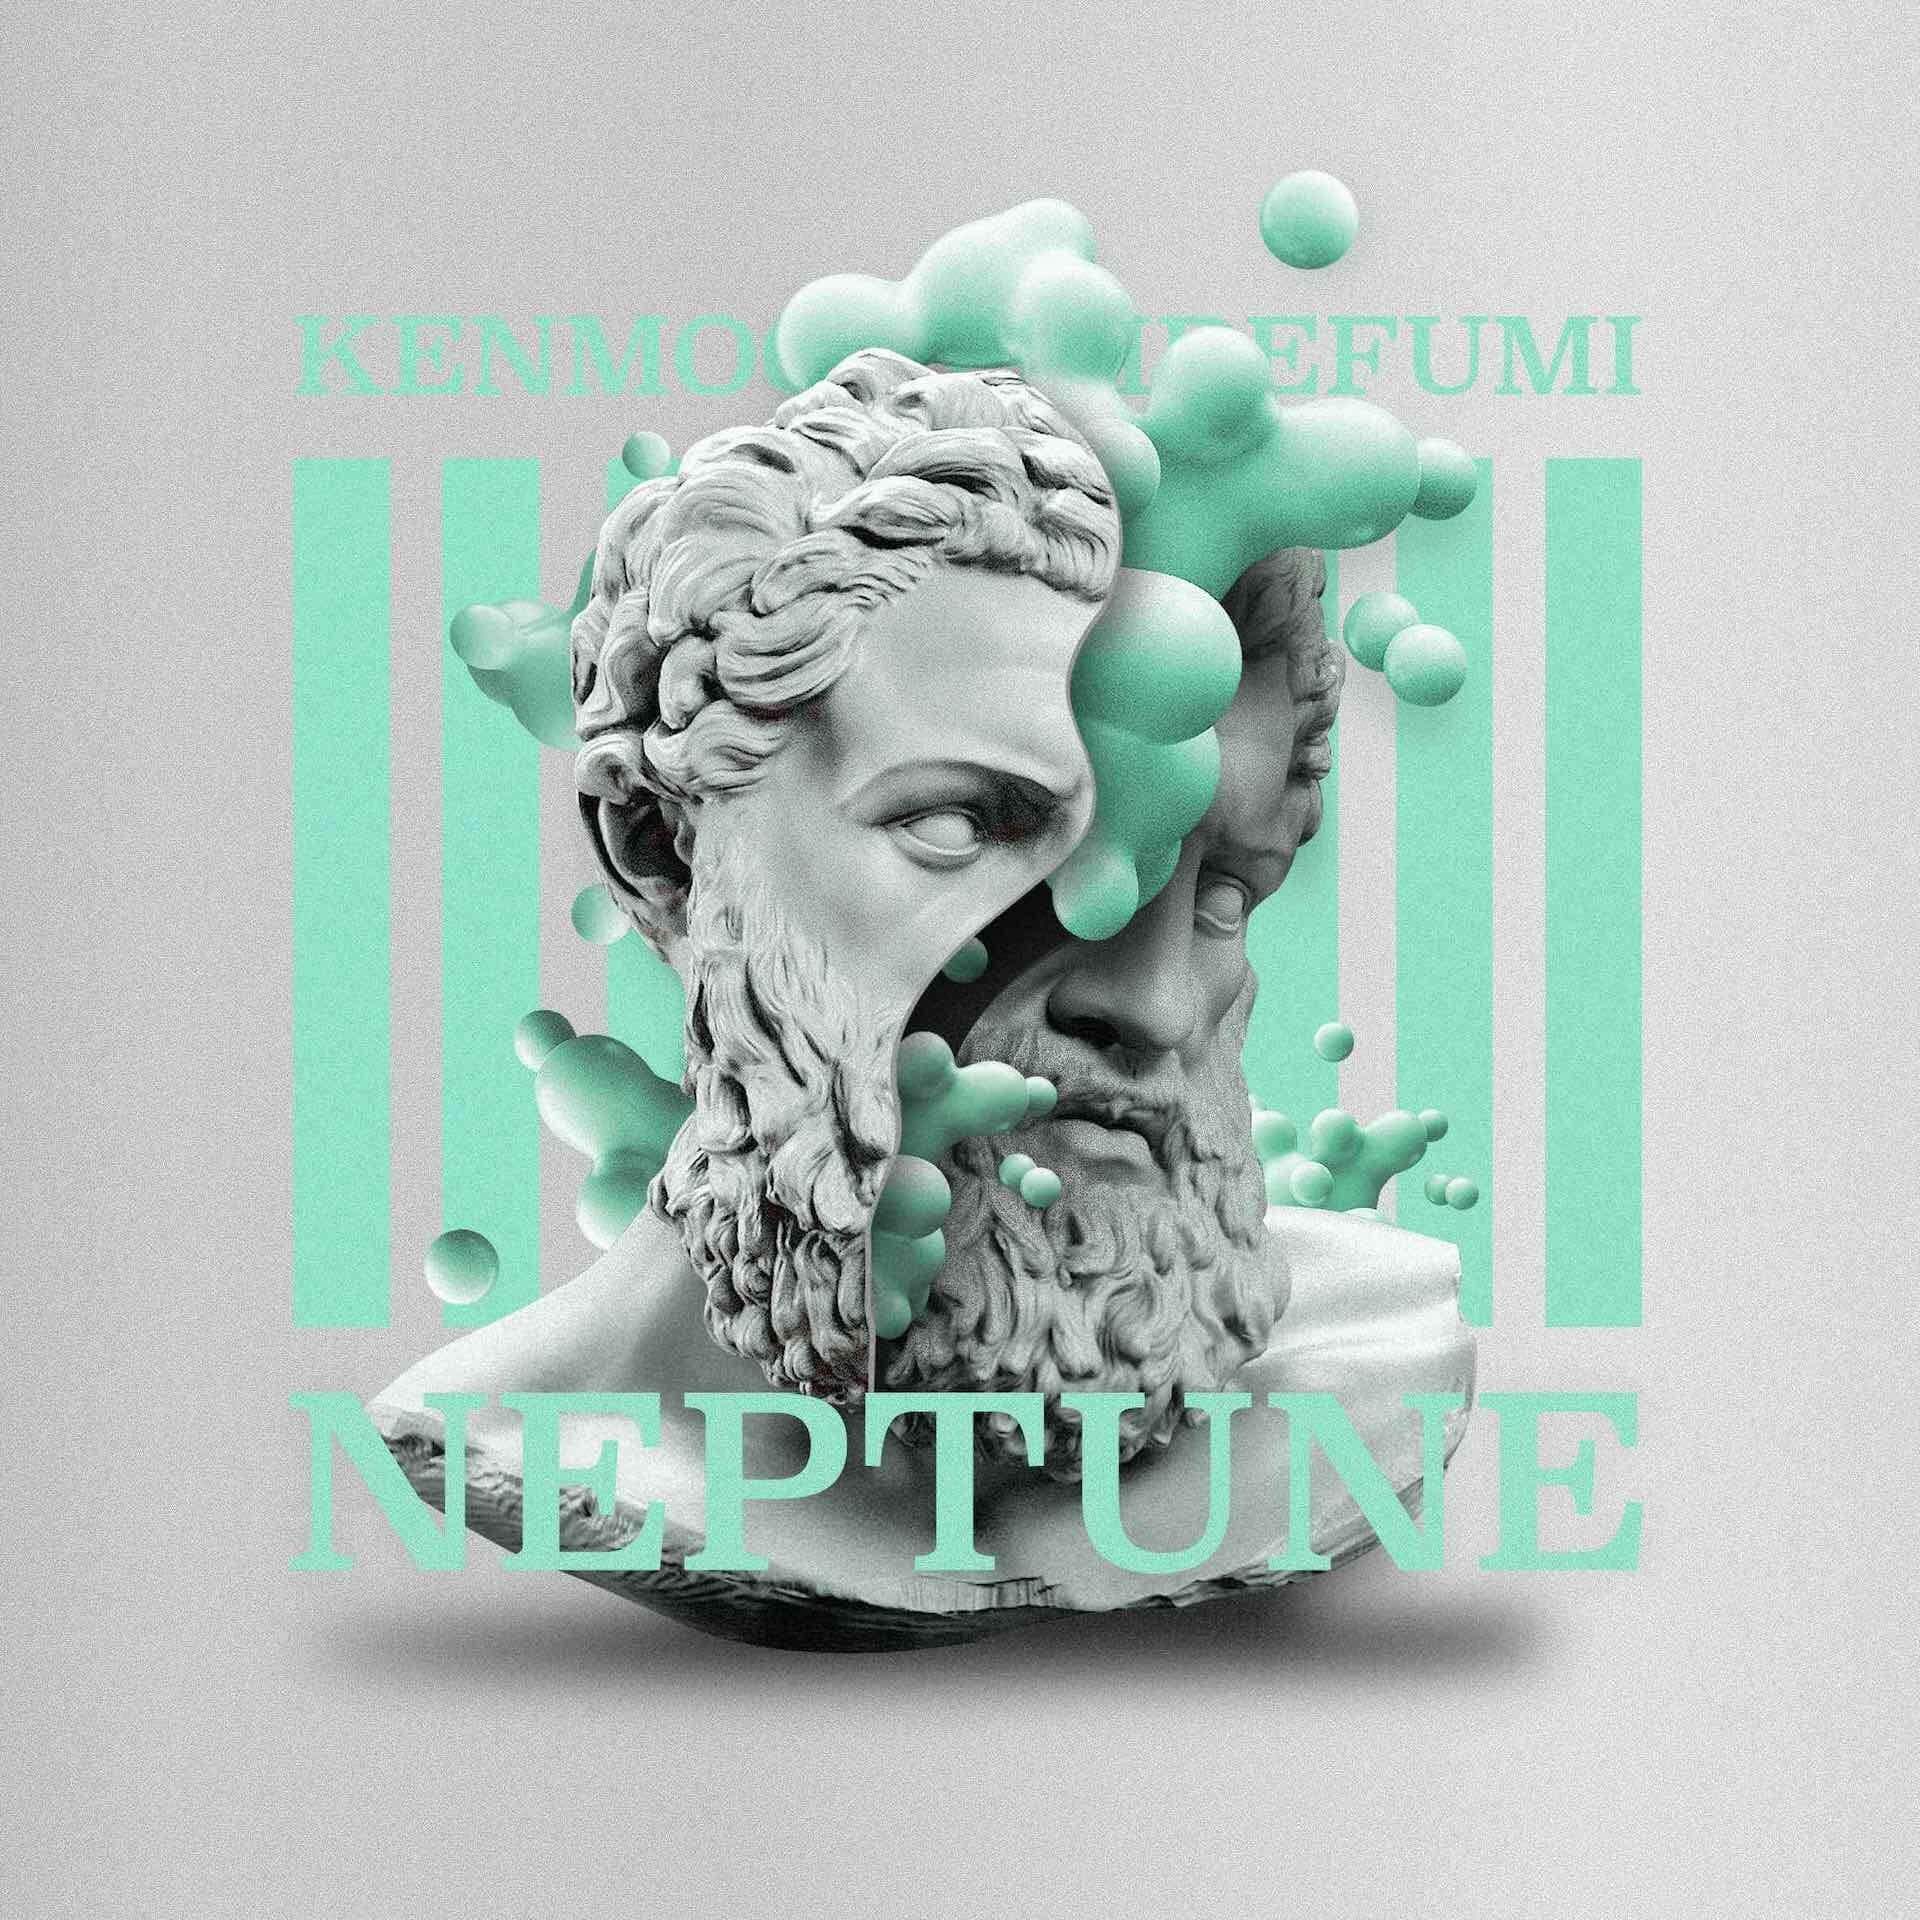 Kenmochi Hidefumiが10ヶ月ぶりの新曲「Neptune」をリリース！“石像のシナプス”を連想させる映像も公開 music200305_neptune_2-1920x1920